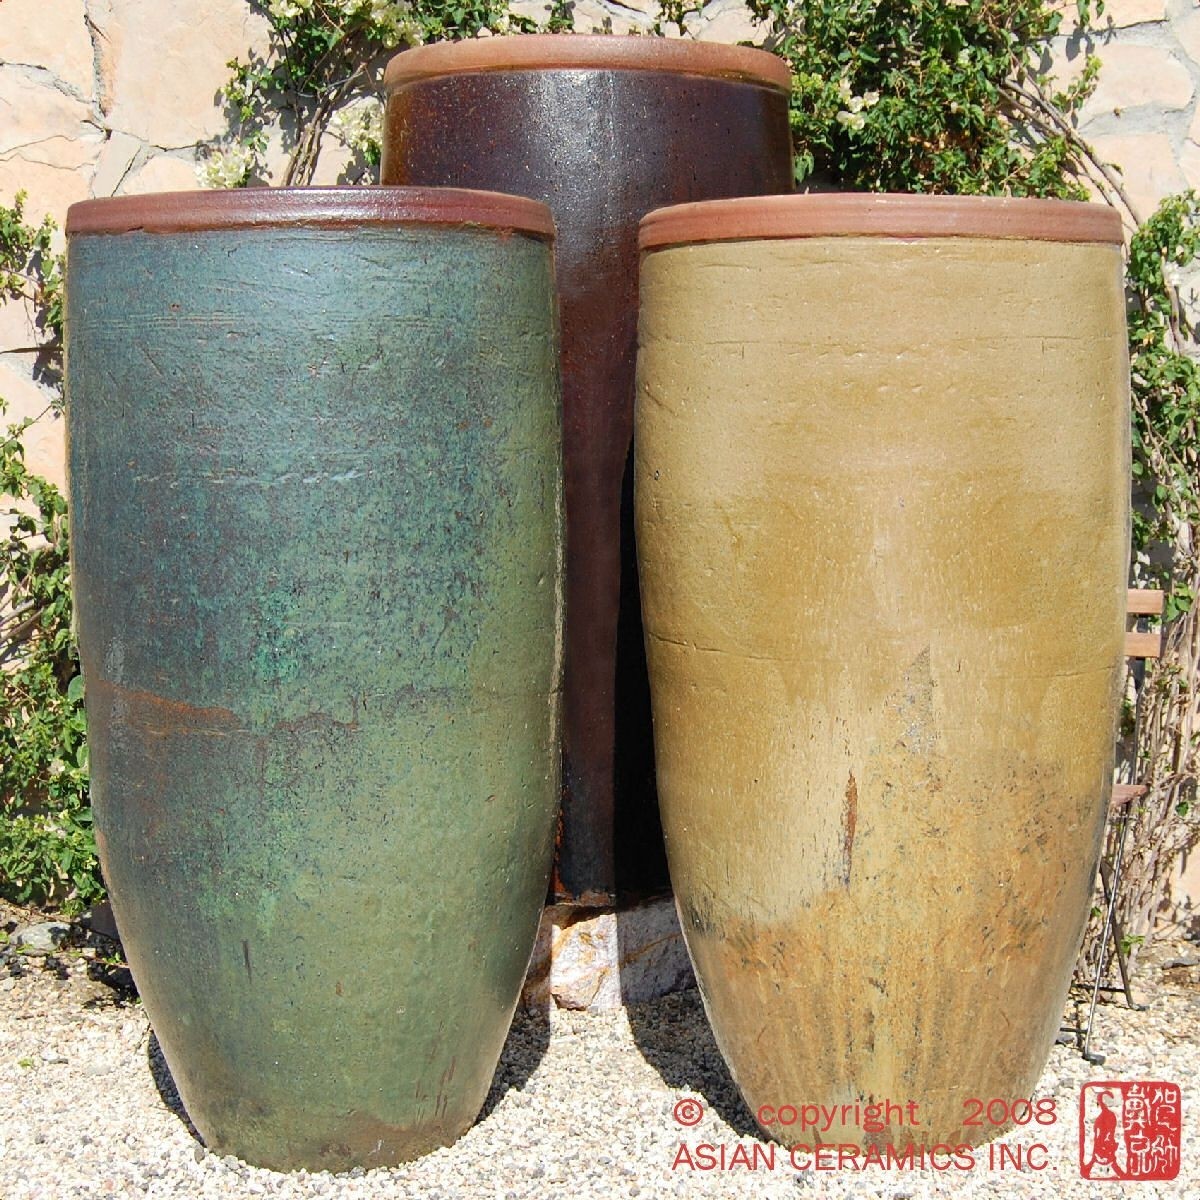 Tall ceramic planters